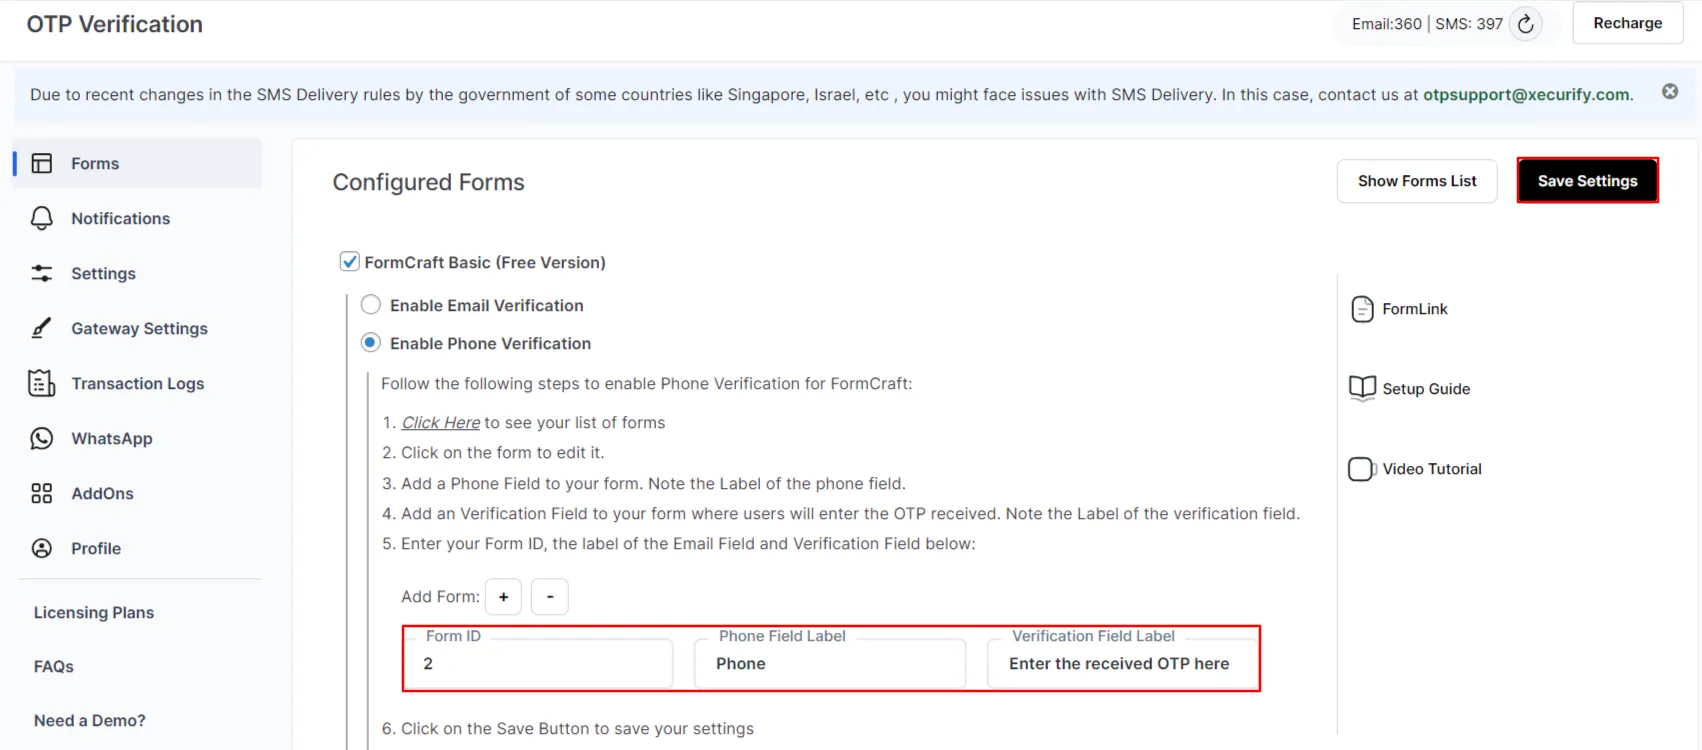 Verificación otp gratuita de formcraft básico: botón Guardar configuración